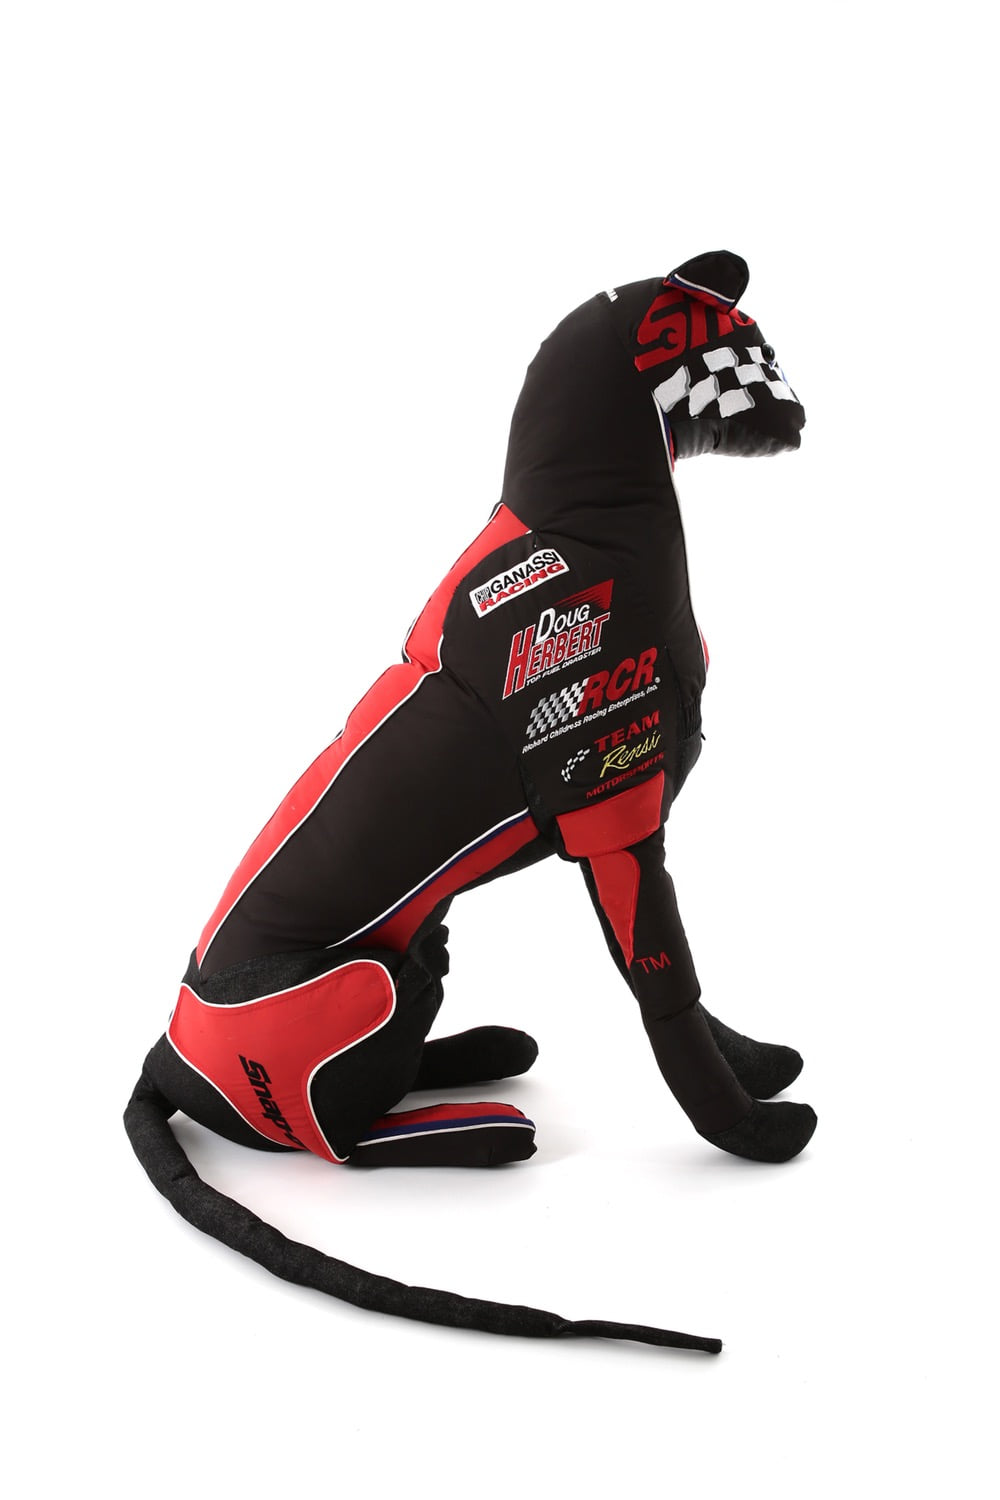 Cheetah 007 Sprint Series (2021) - Deconstructed red racing jumper